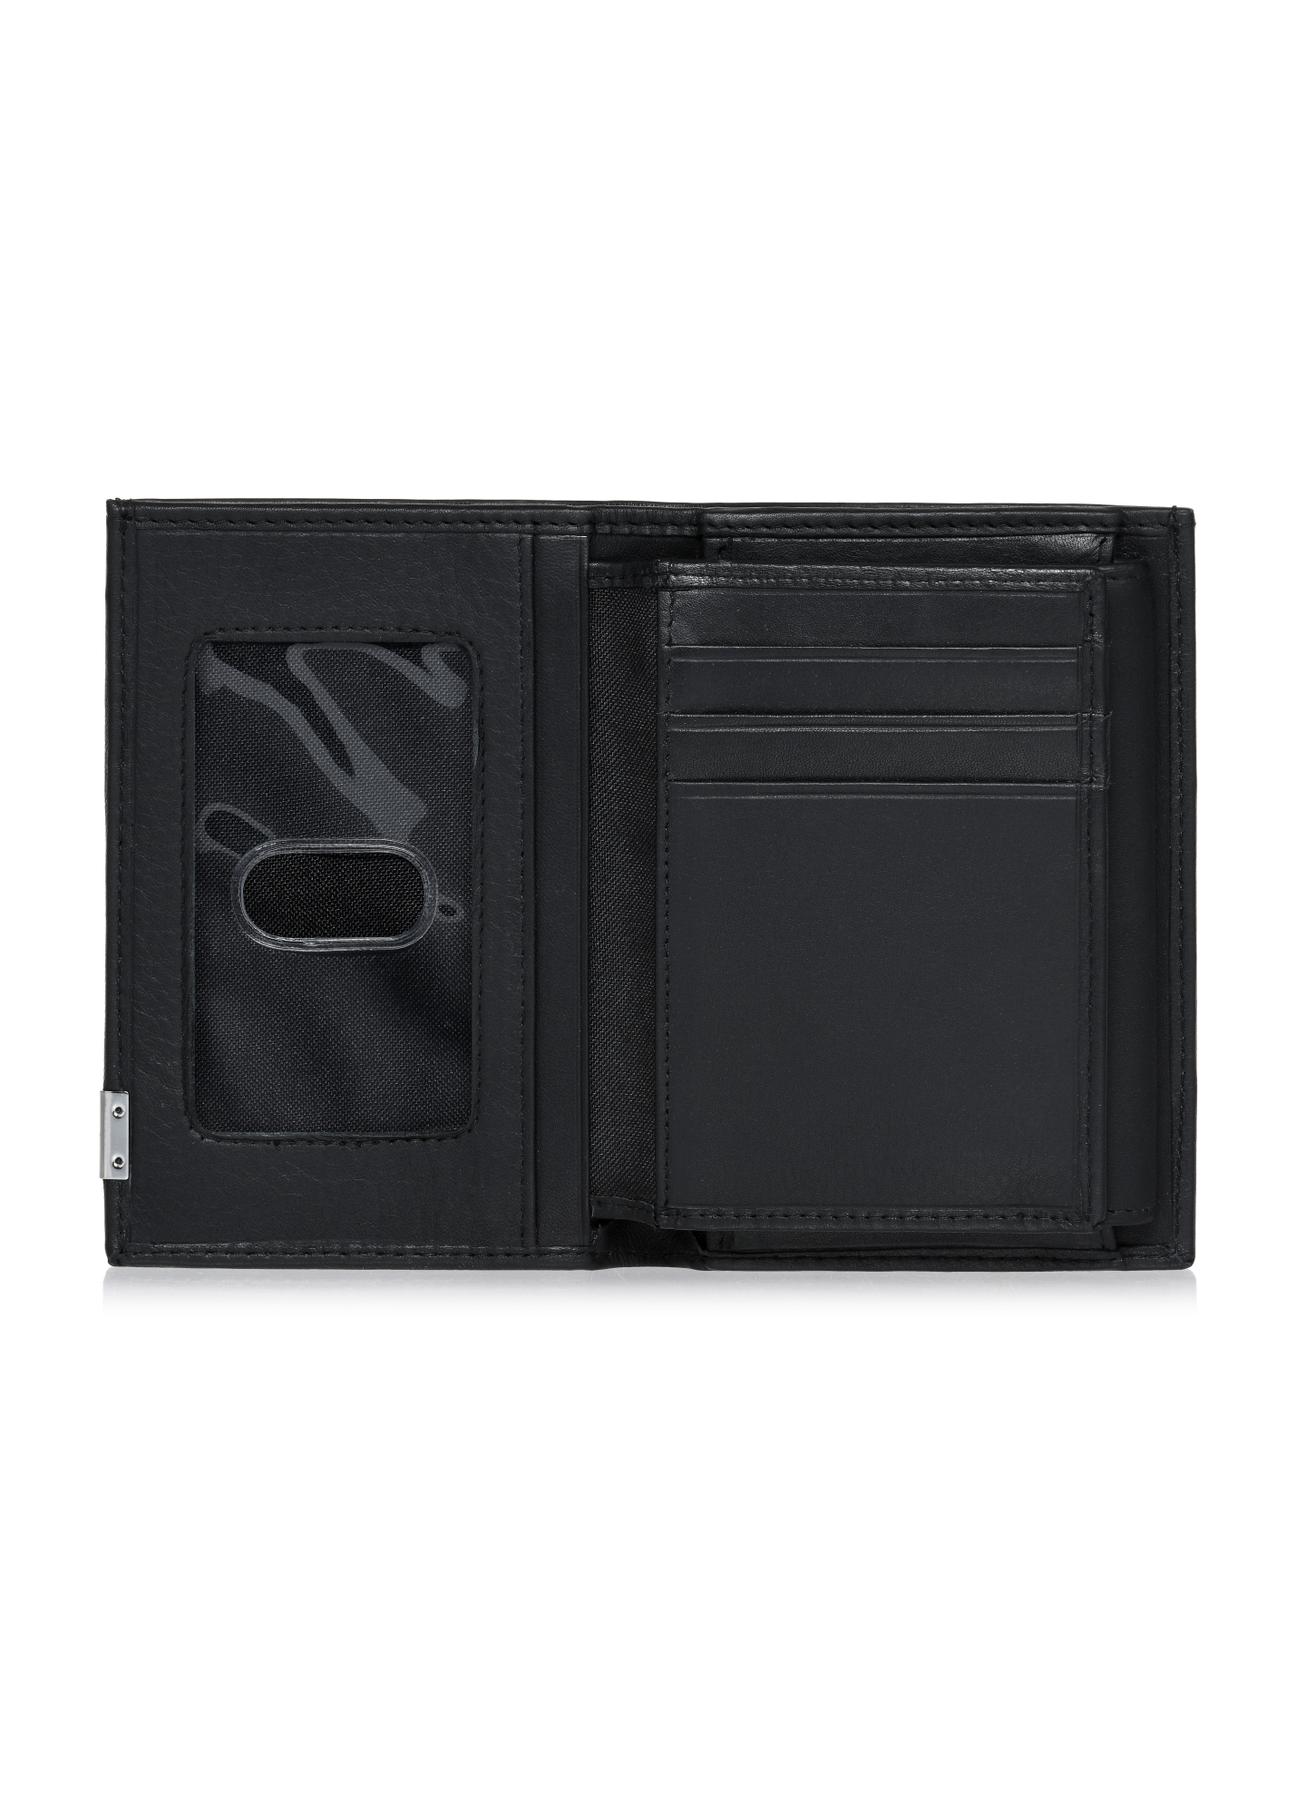 Czarny skórzany portfel męski PORMS-0145-99(Z23)